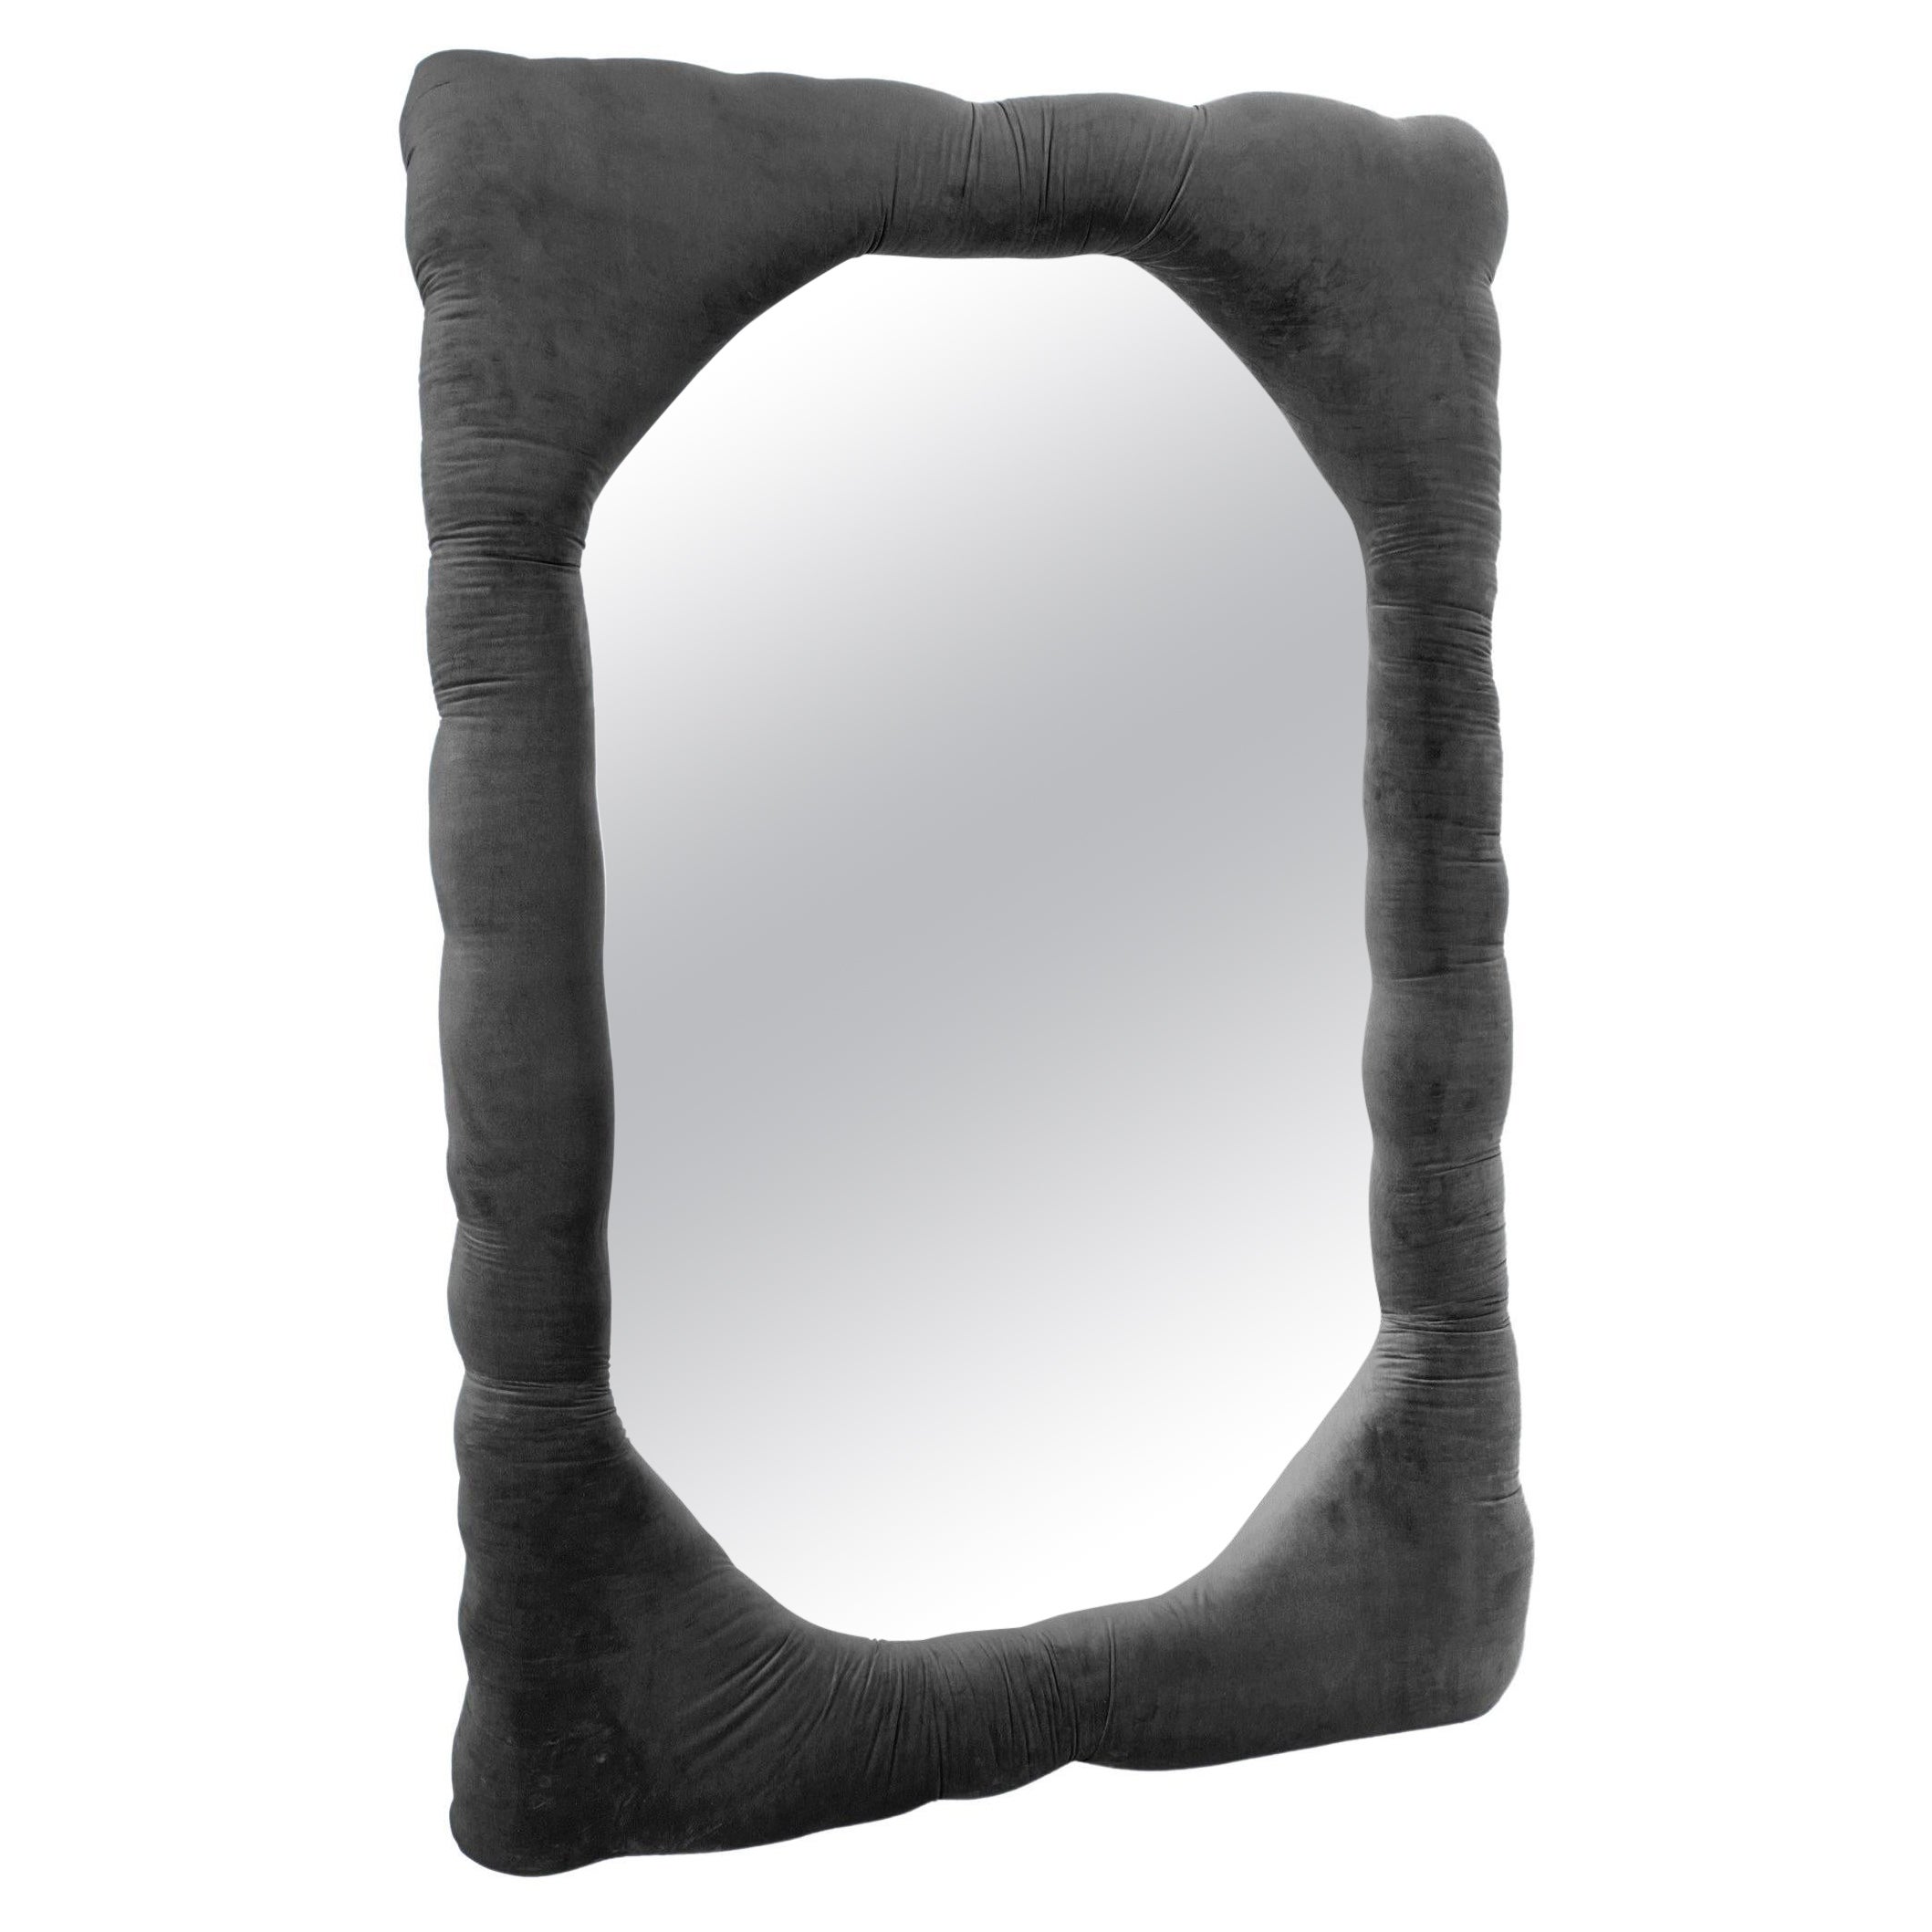 Velvet Biomorphic Mirror in Gray by Brandi Howe, REP by Tuleste Factory For Sale